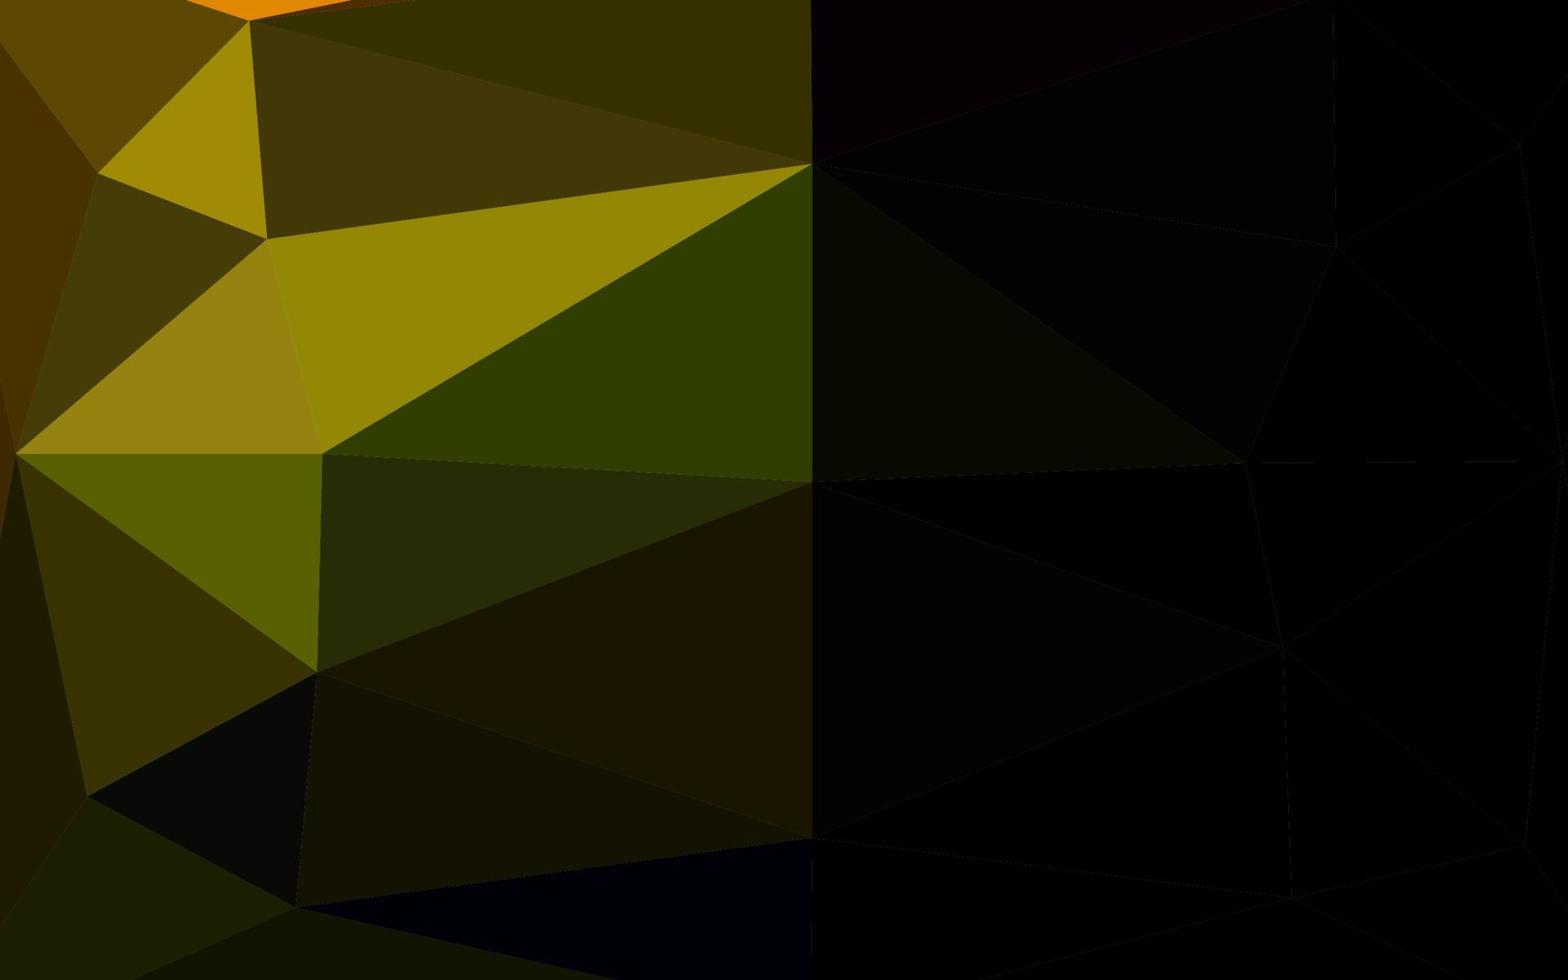 Dark Green vector blurry triangle texture.